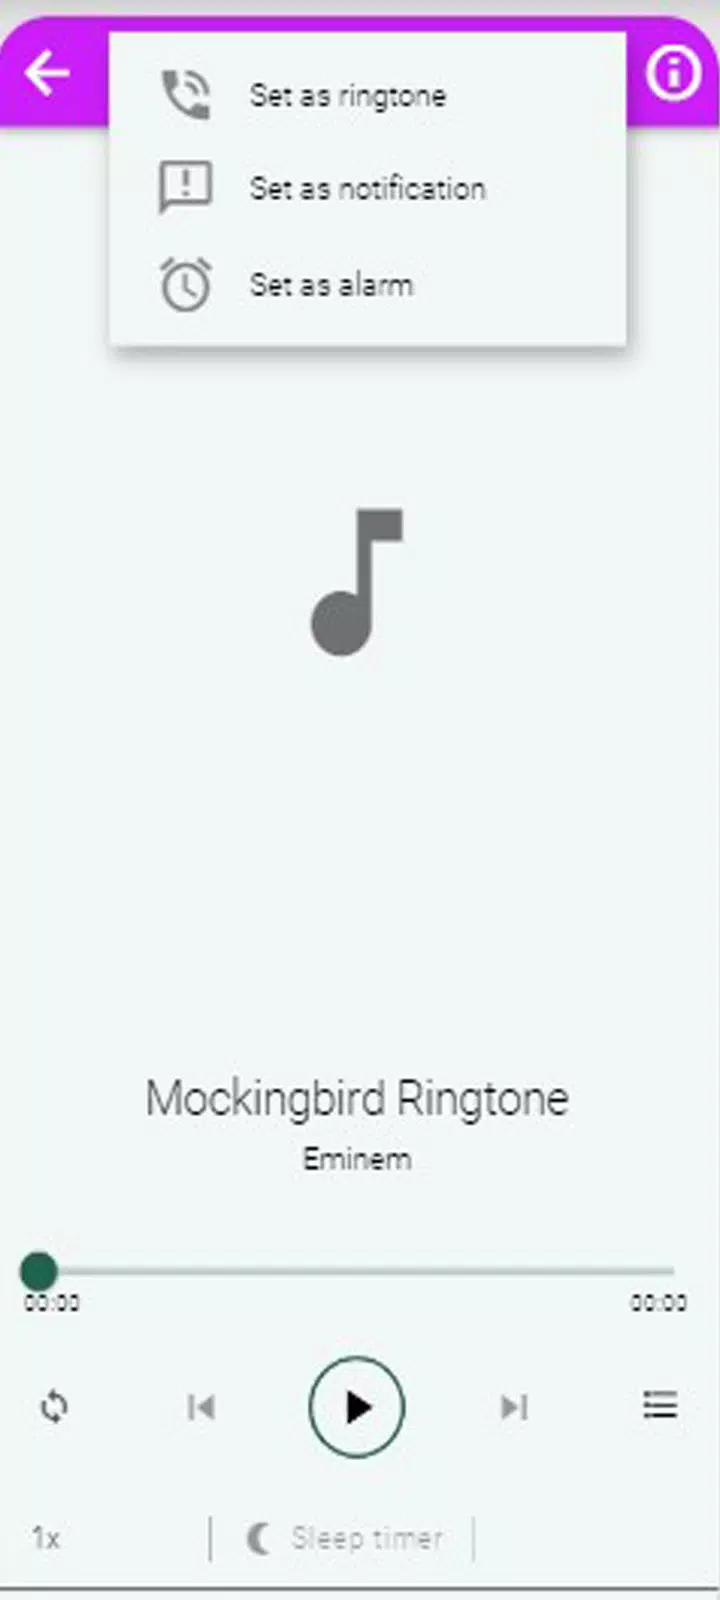 Eminem - mockingbird(Lyrics spotify version) 